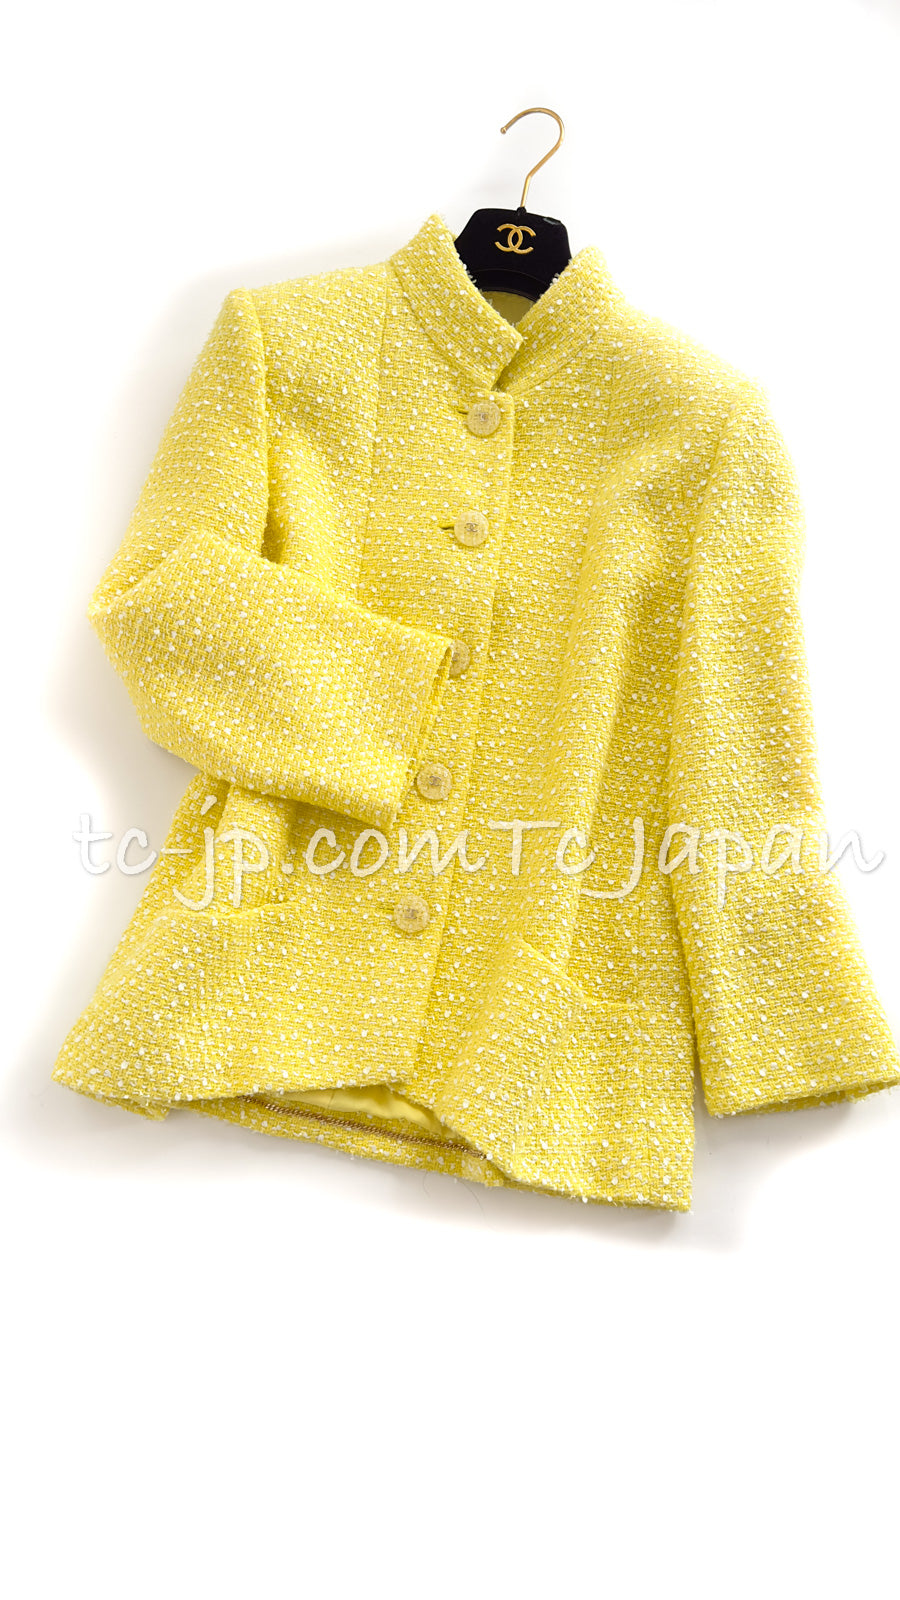 CHANEL 19S Yellow White Cotton Tweed Jacket 44 シャネル イエロー・ホワイト・コットン・ツイード・ジャケット